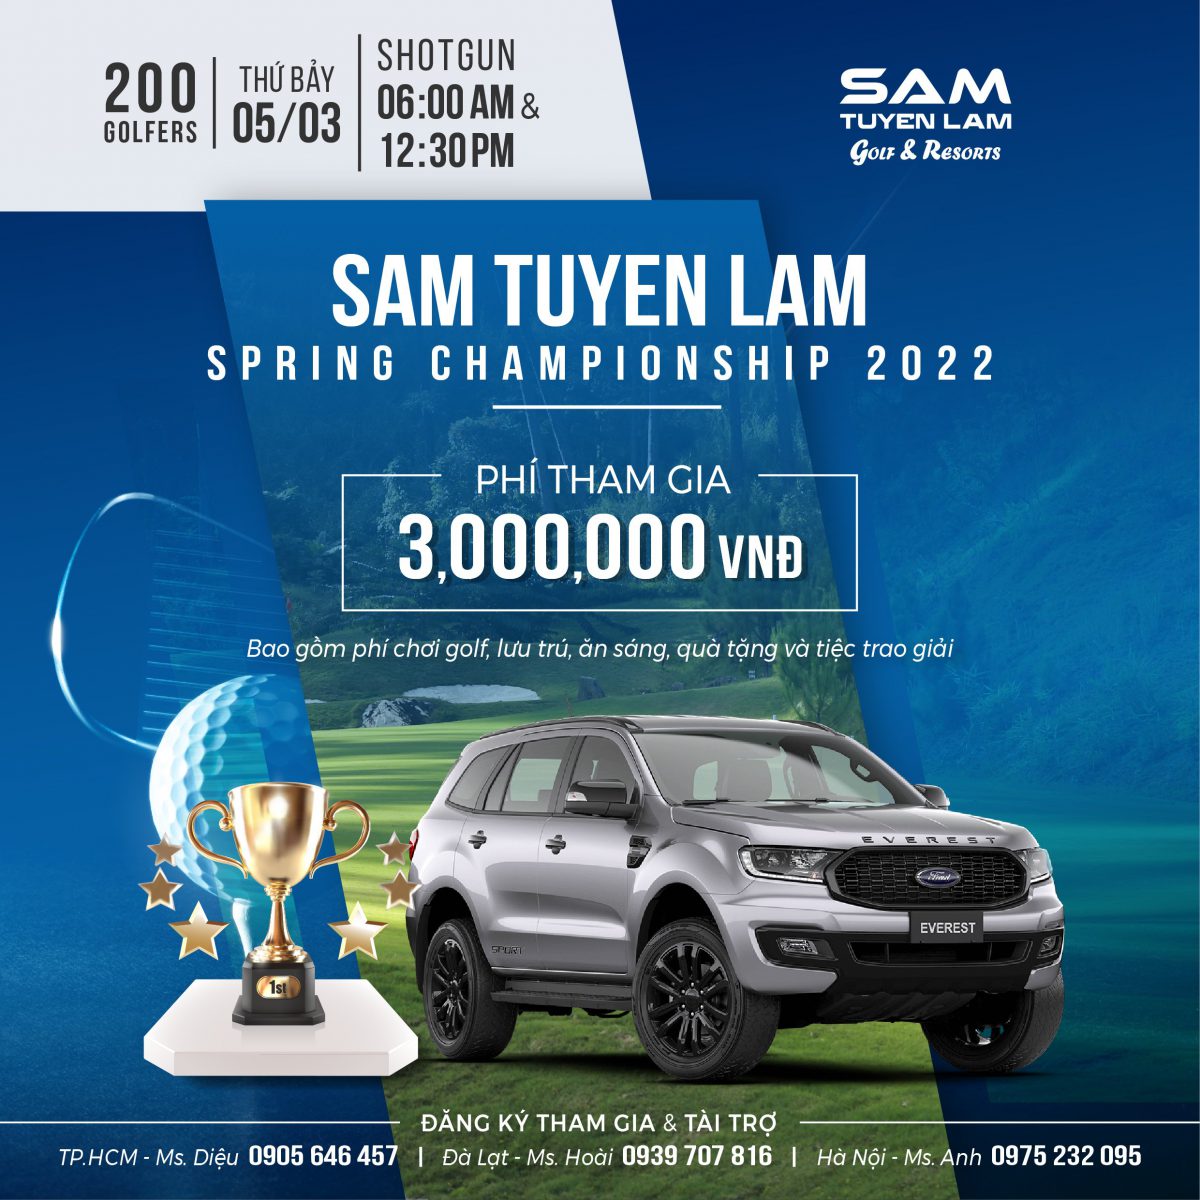 (Tiếng Việt) SAM TUYEN LAM SPRING CHAMPIONSHIP 2022